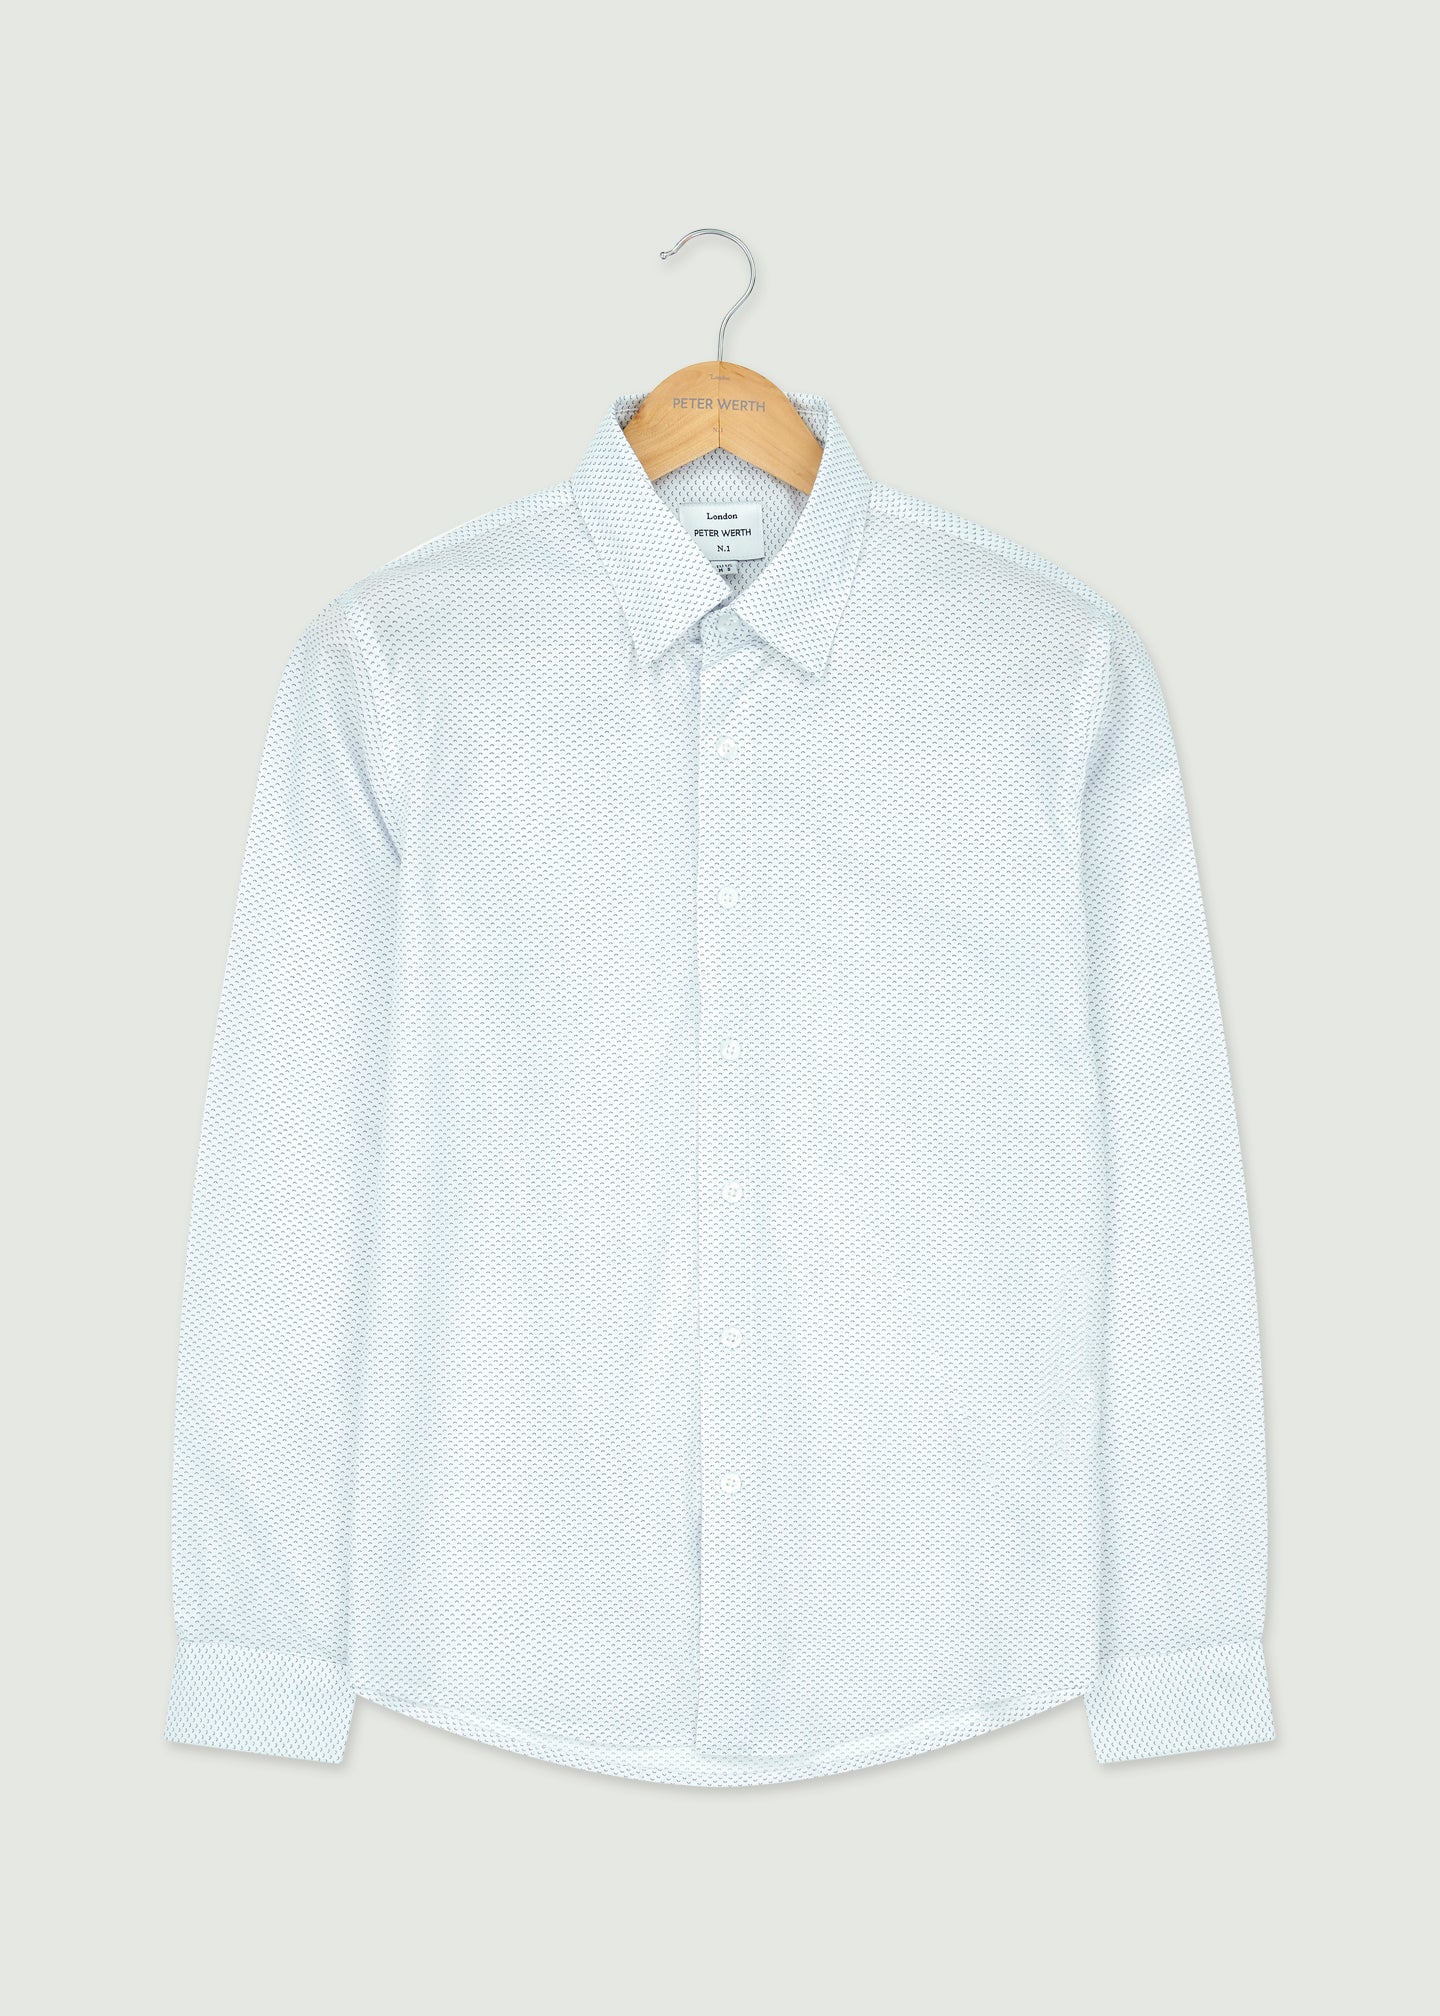 Thomas Long Sleeve Shirt - White